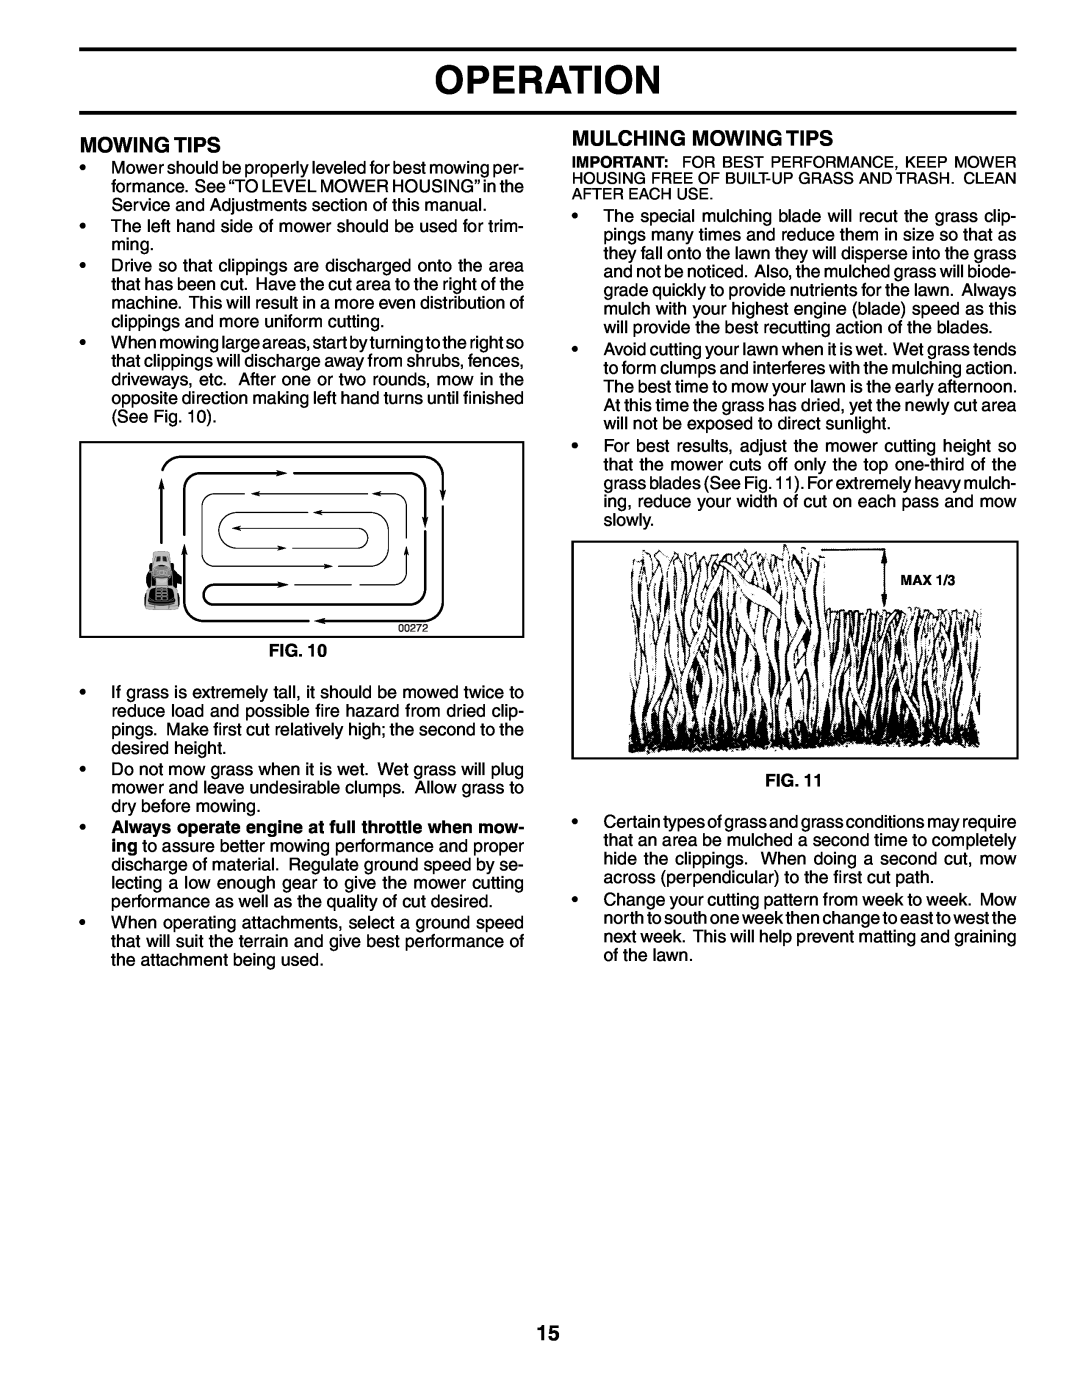 Poulan PD24PH42ST manual Mulching Mowing Tips, Operation 